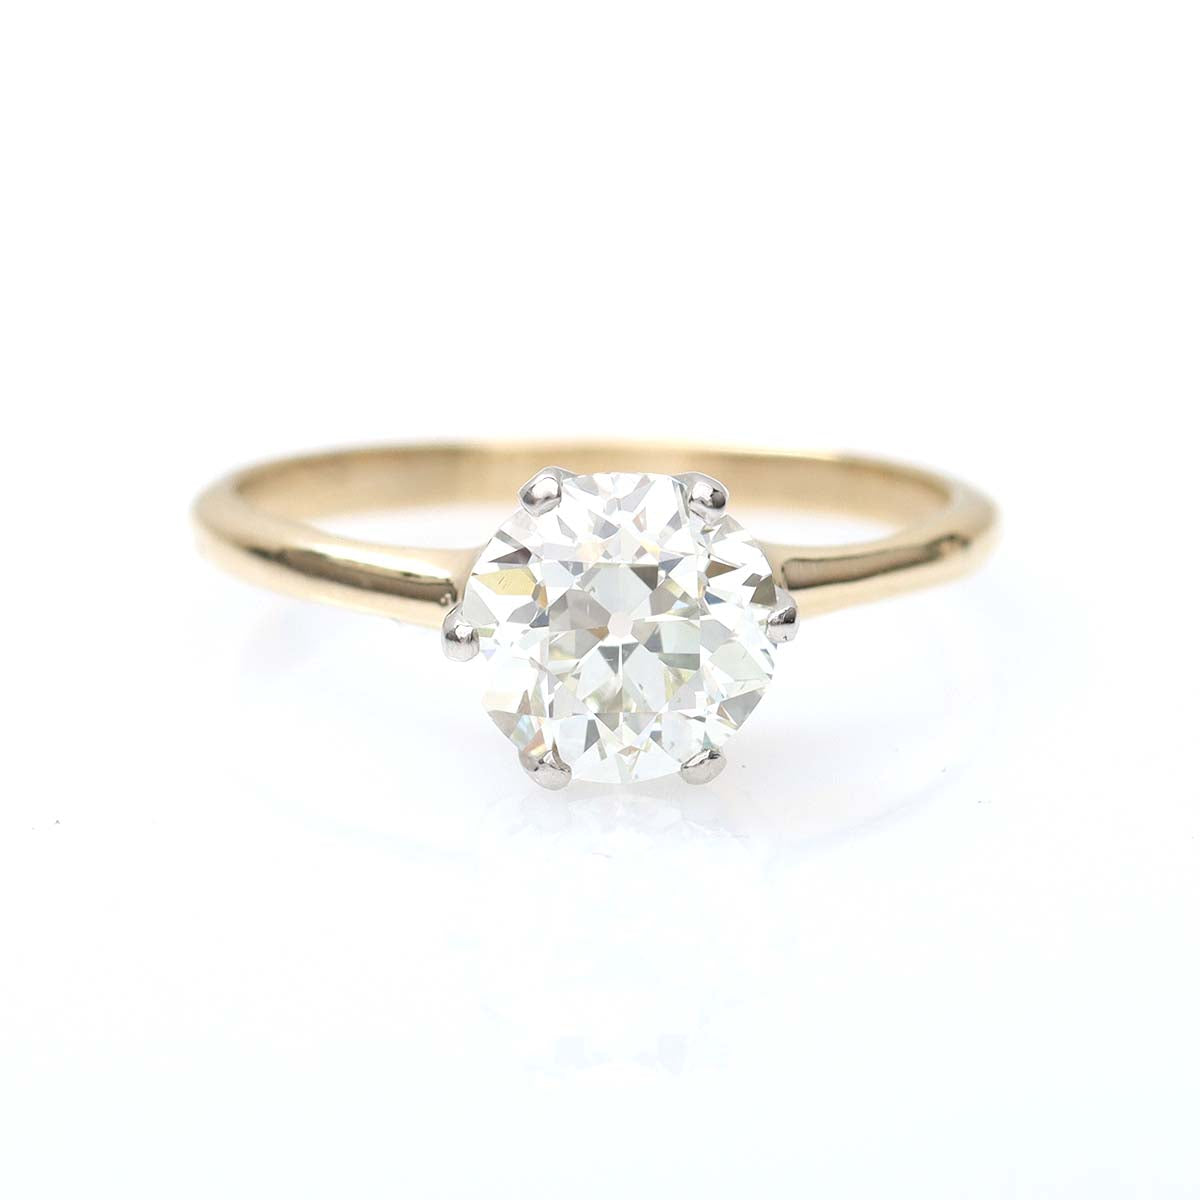 The Abigail Old European Cut Diamond Engagement Ring #3372-5